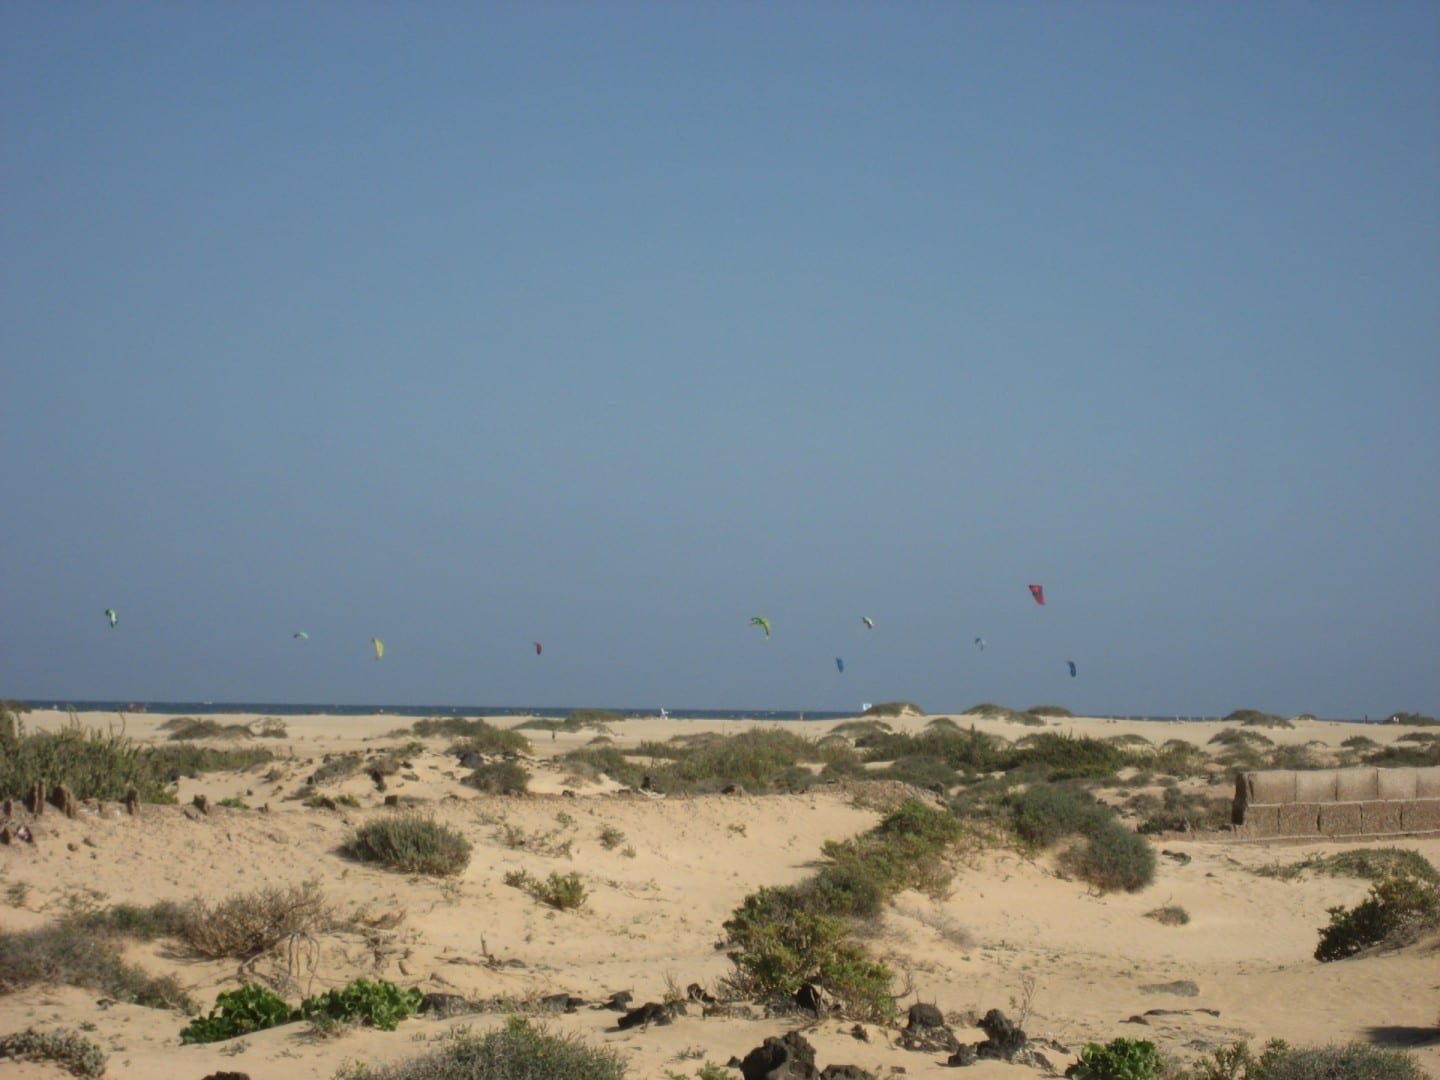 Kite Surfers justo al sur del centro de Correlejo Corralejo, Fuerteventura España